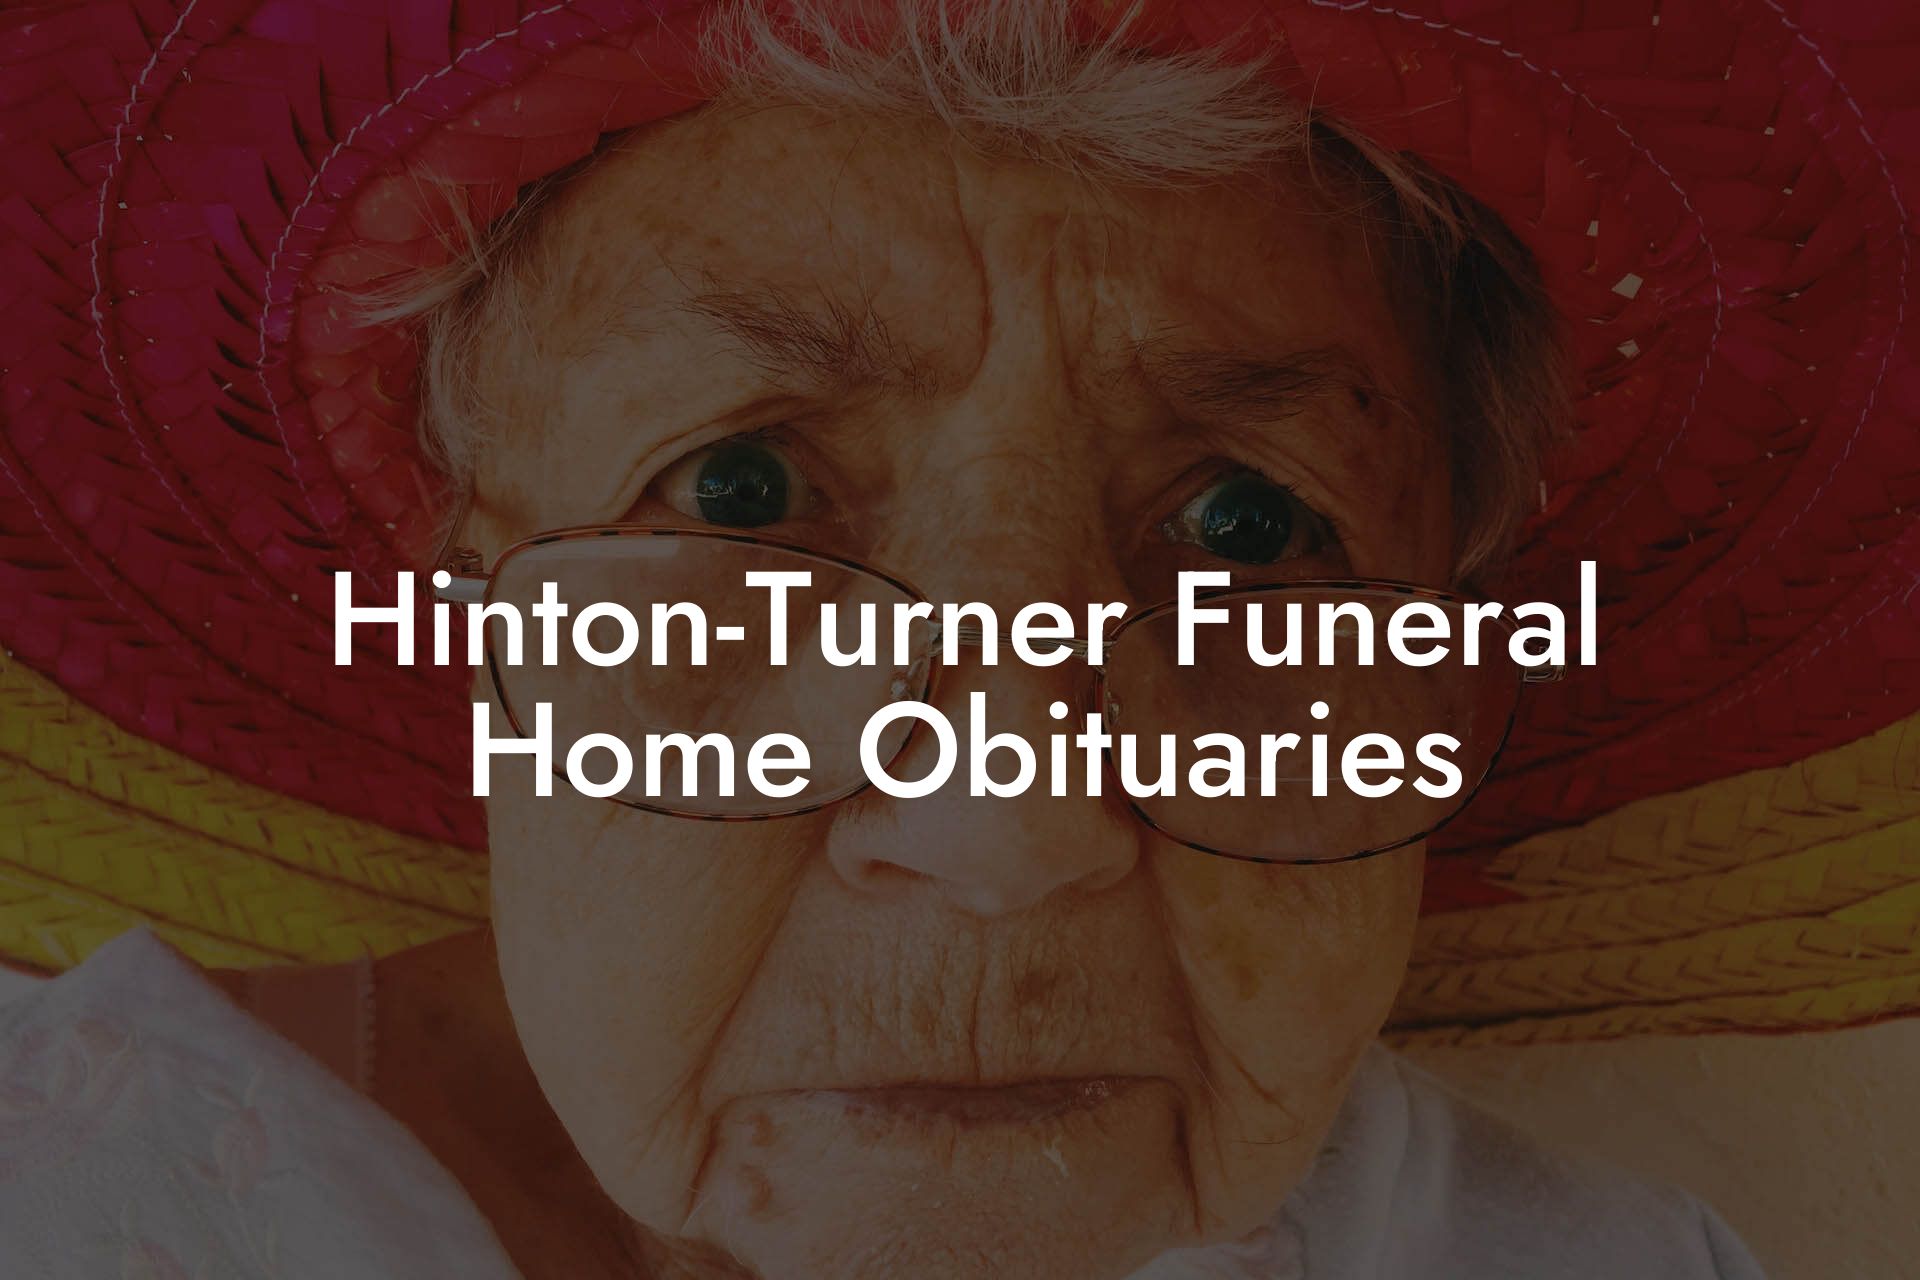 Hinton-Turner Funeral Home Obituaries